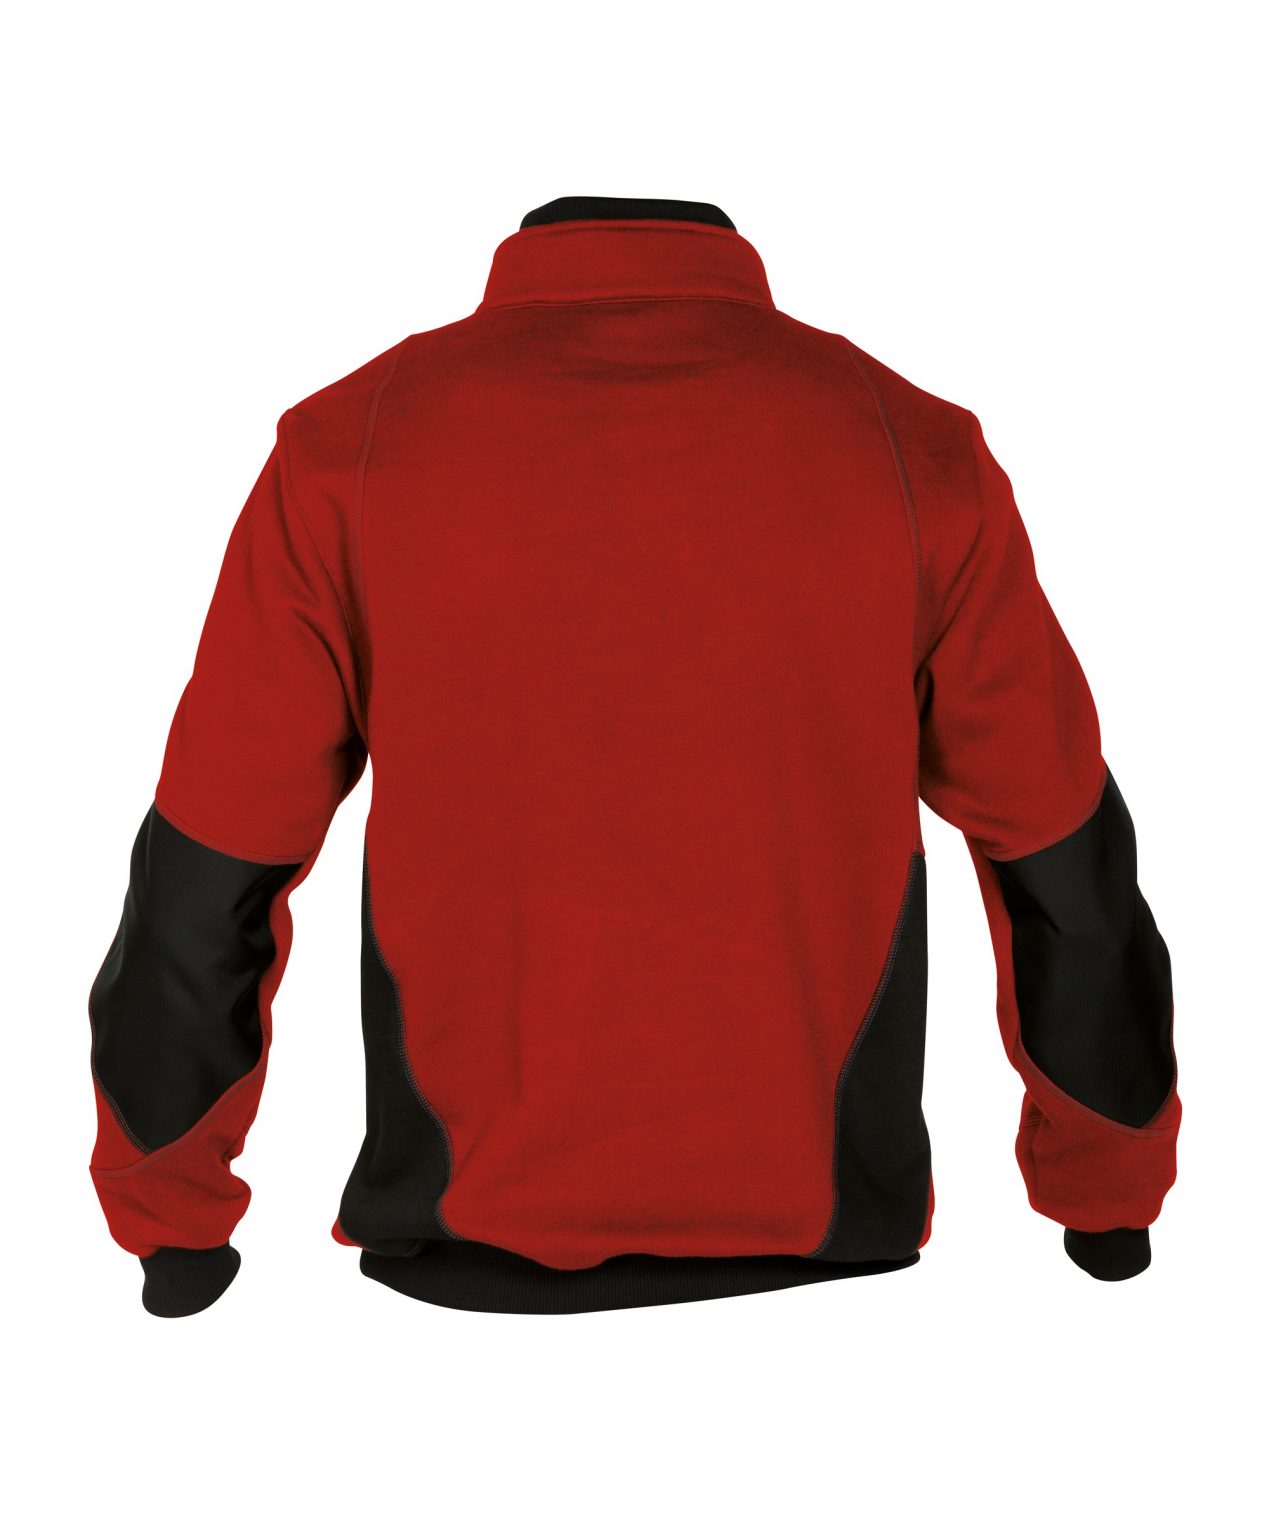 stellar sweatshirt red black back